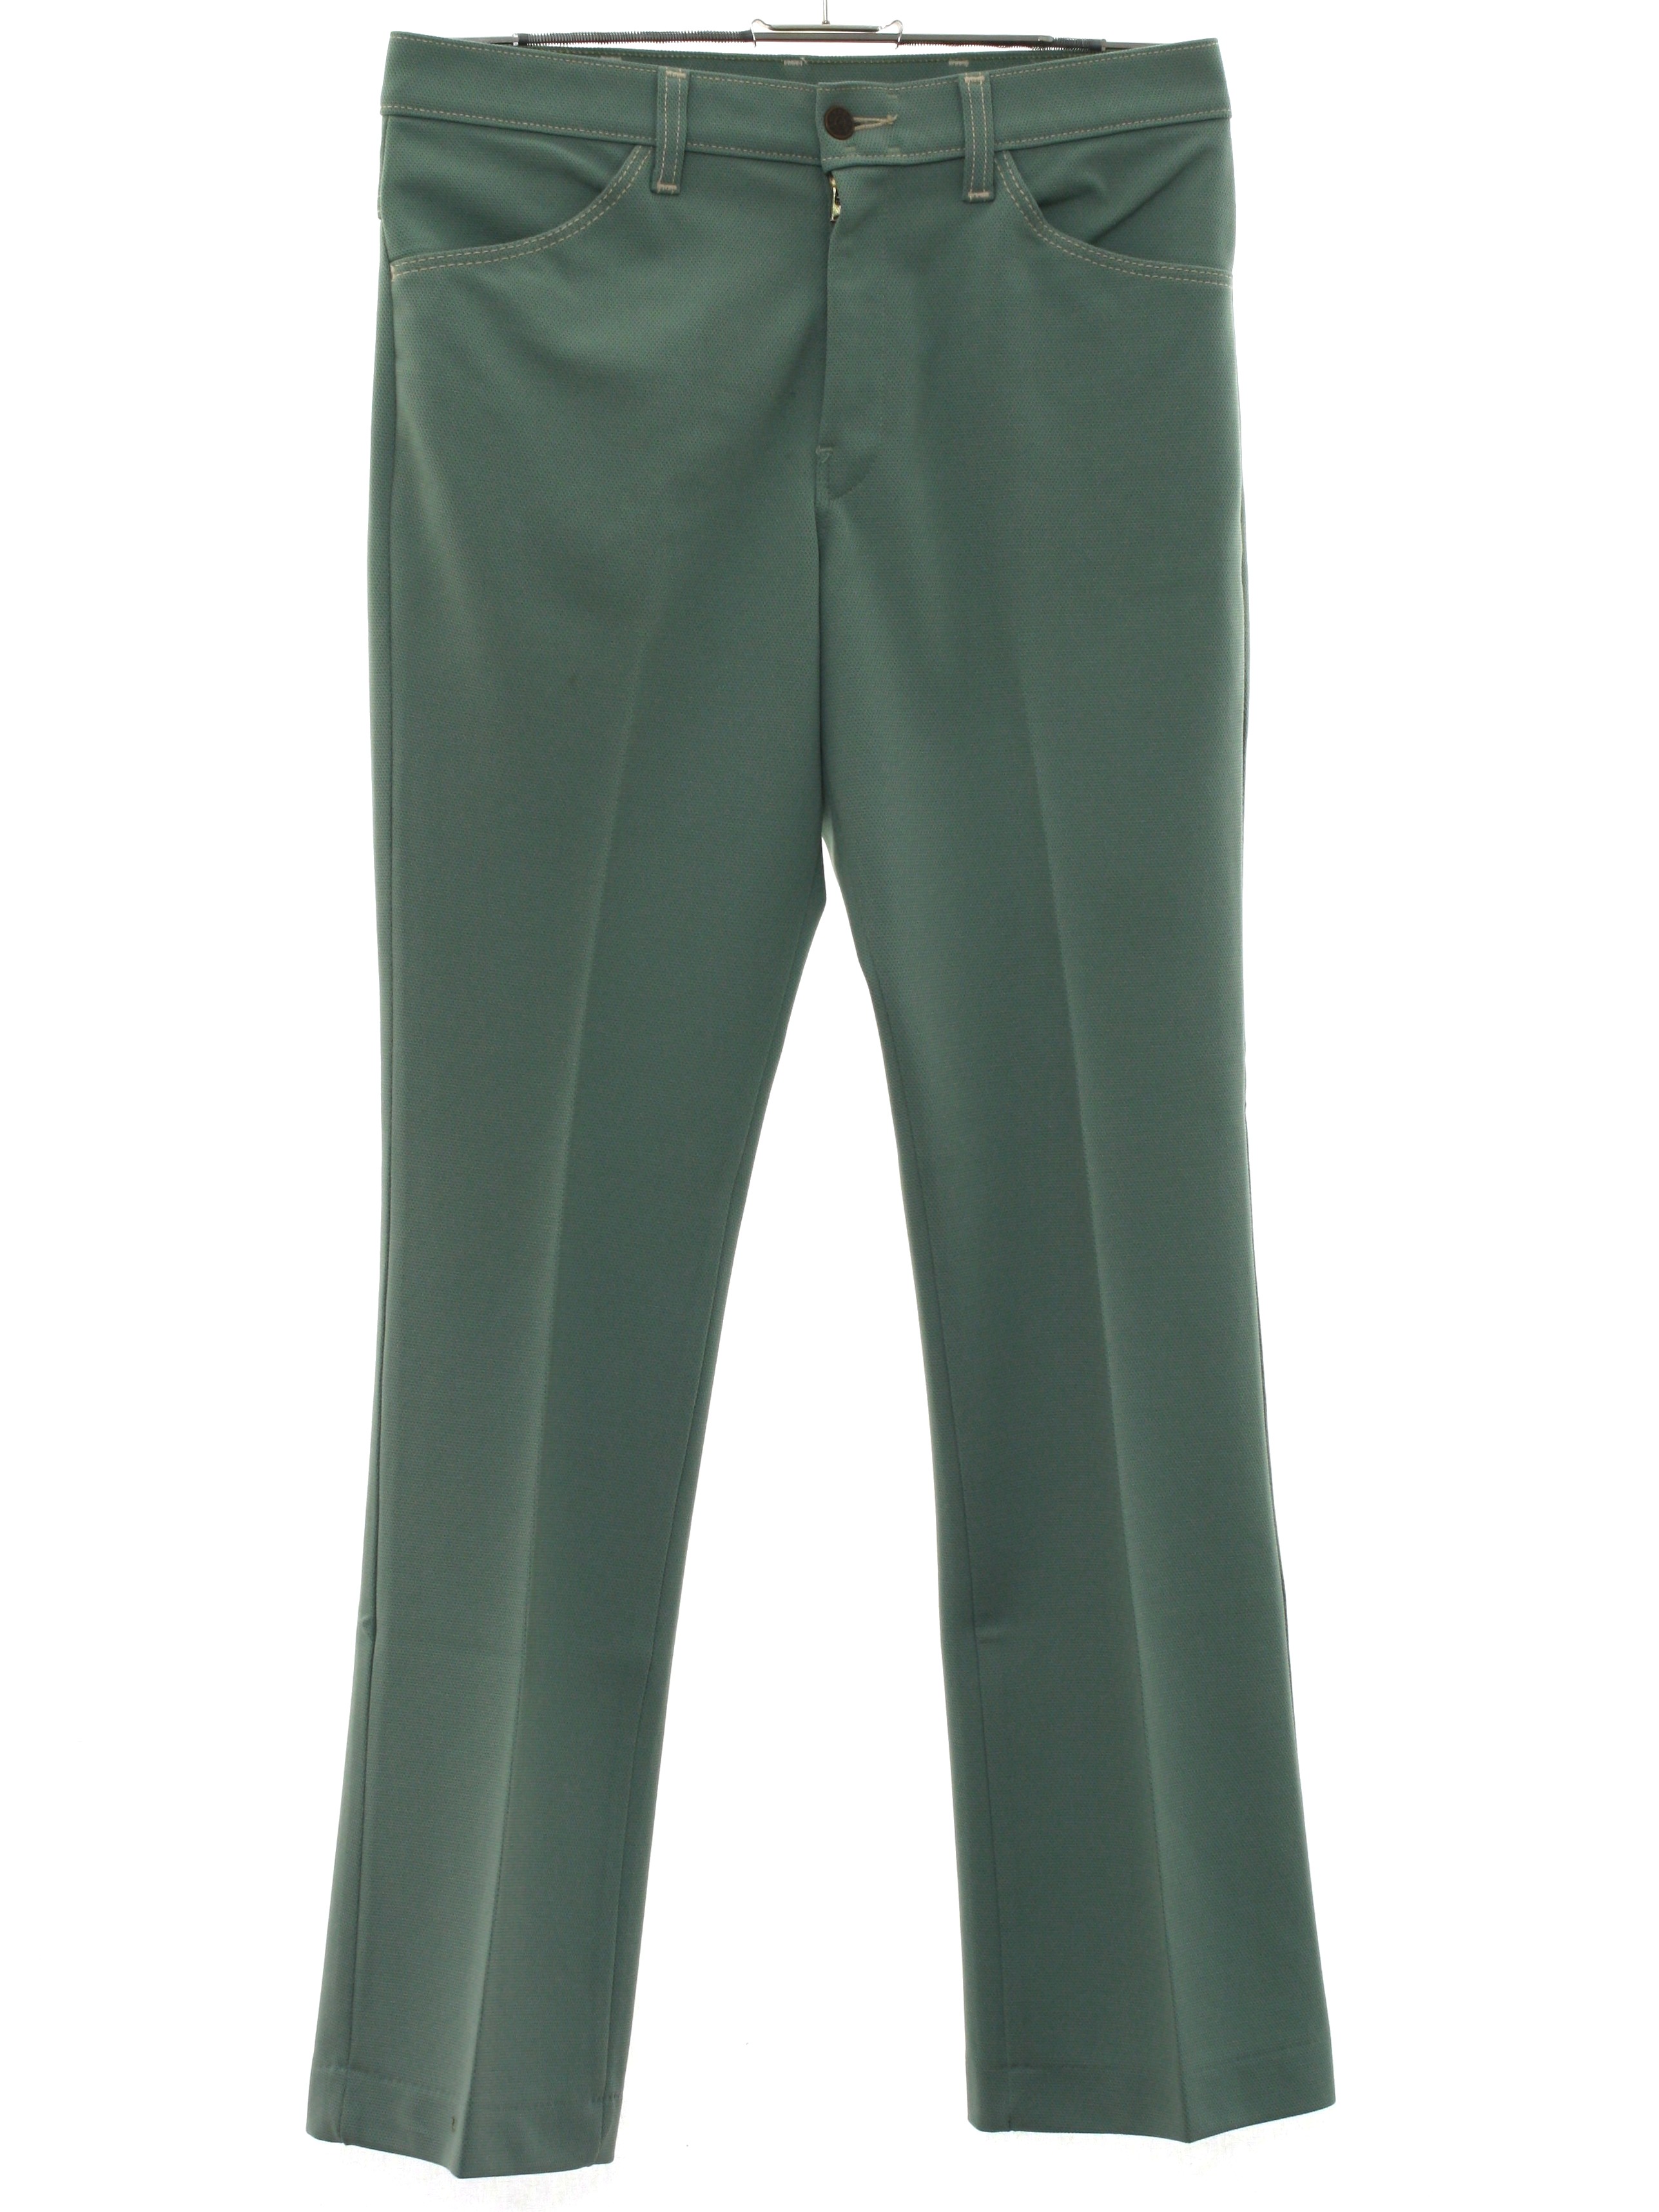 70s Flared Pants / Flares (Farah): 70s -Farah- Mens mint green solid ...